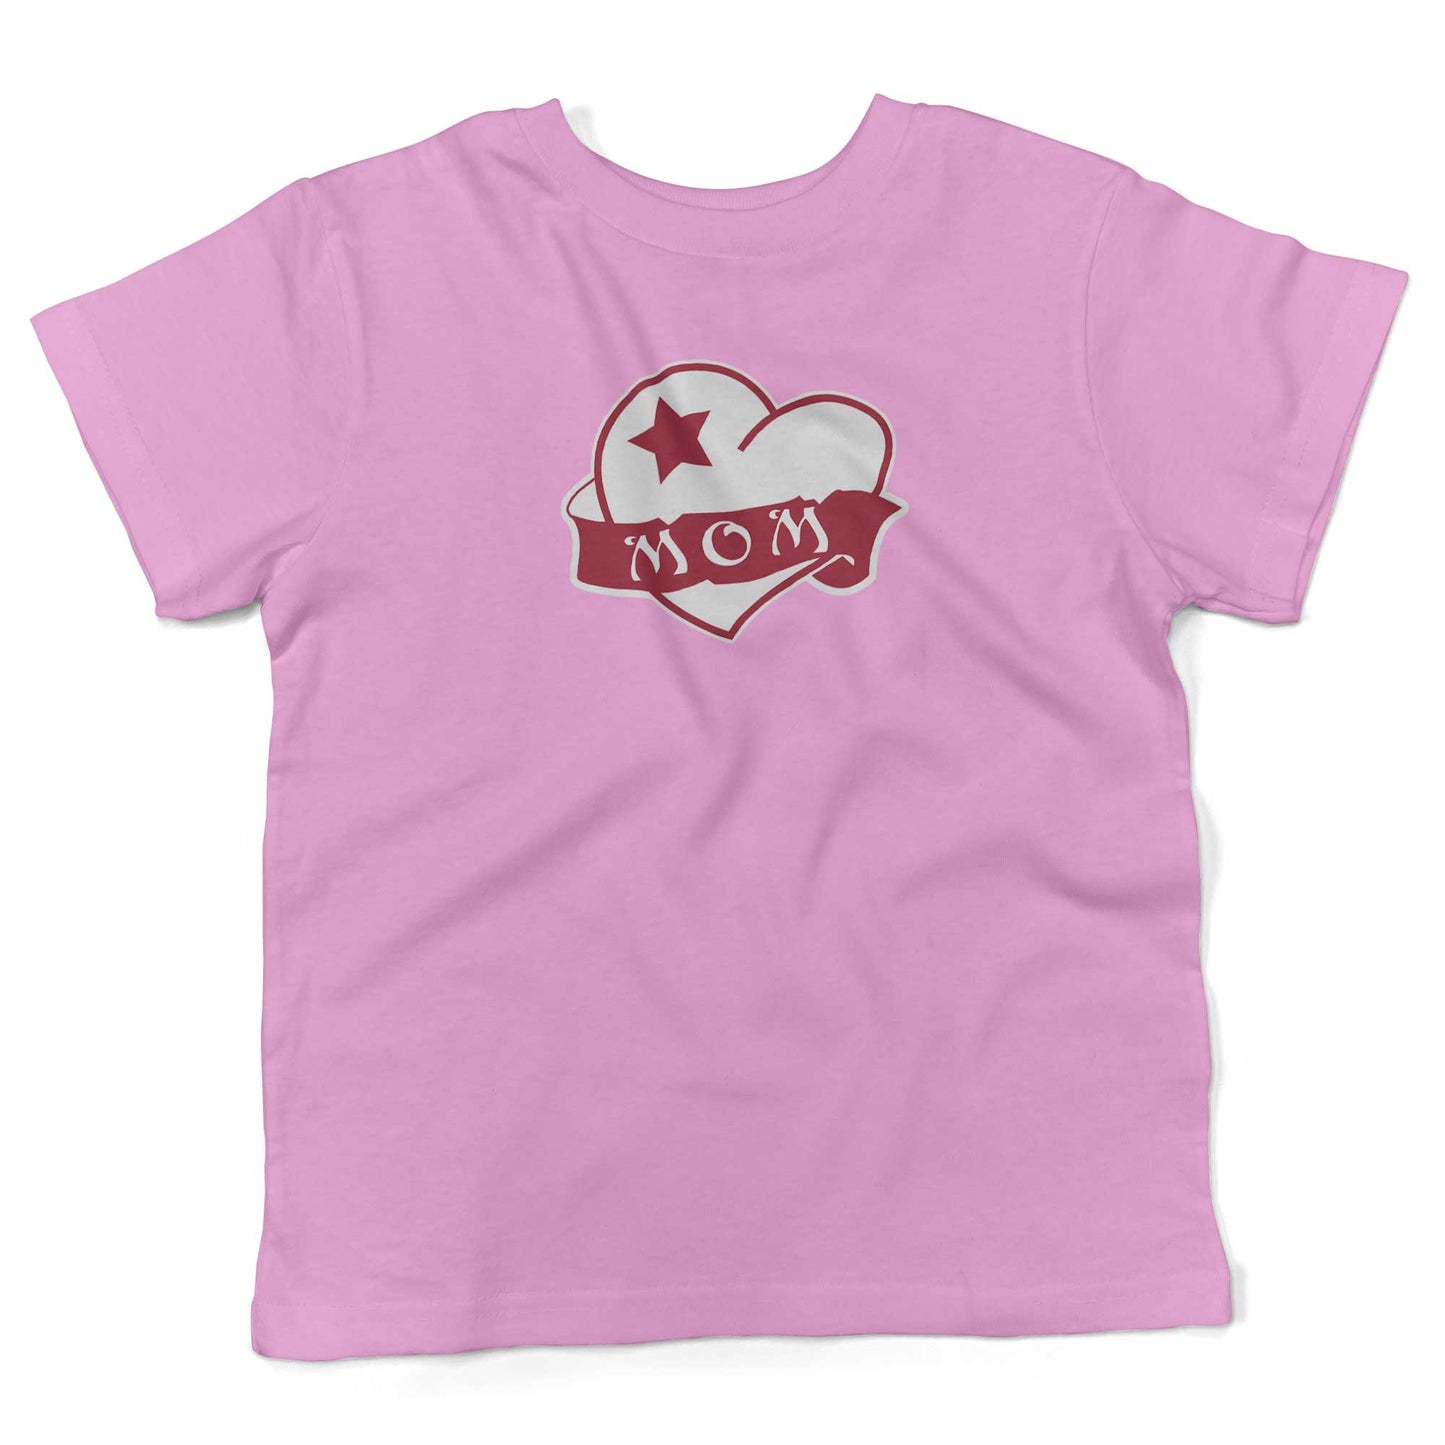 Mom Tattoo Heart Toddler Shirt-Organic Pink-2T